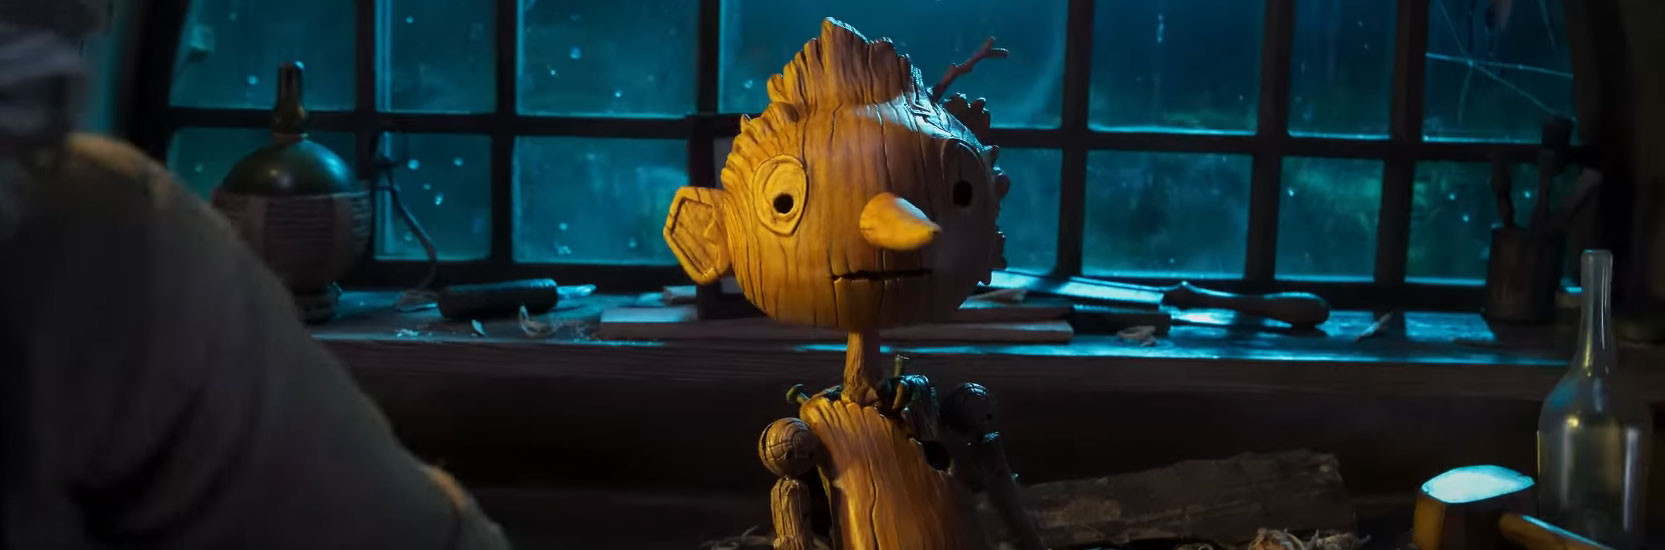 Une bande-annonce pour le « Pinocchio » de Guillermo Del Toro